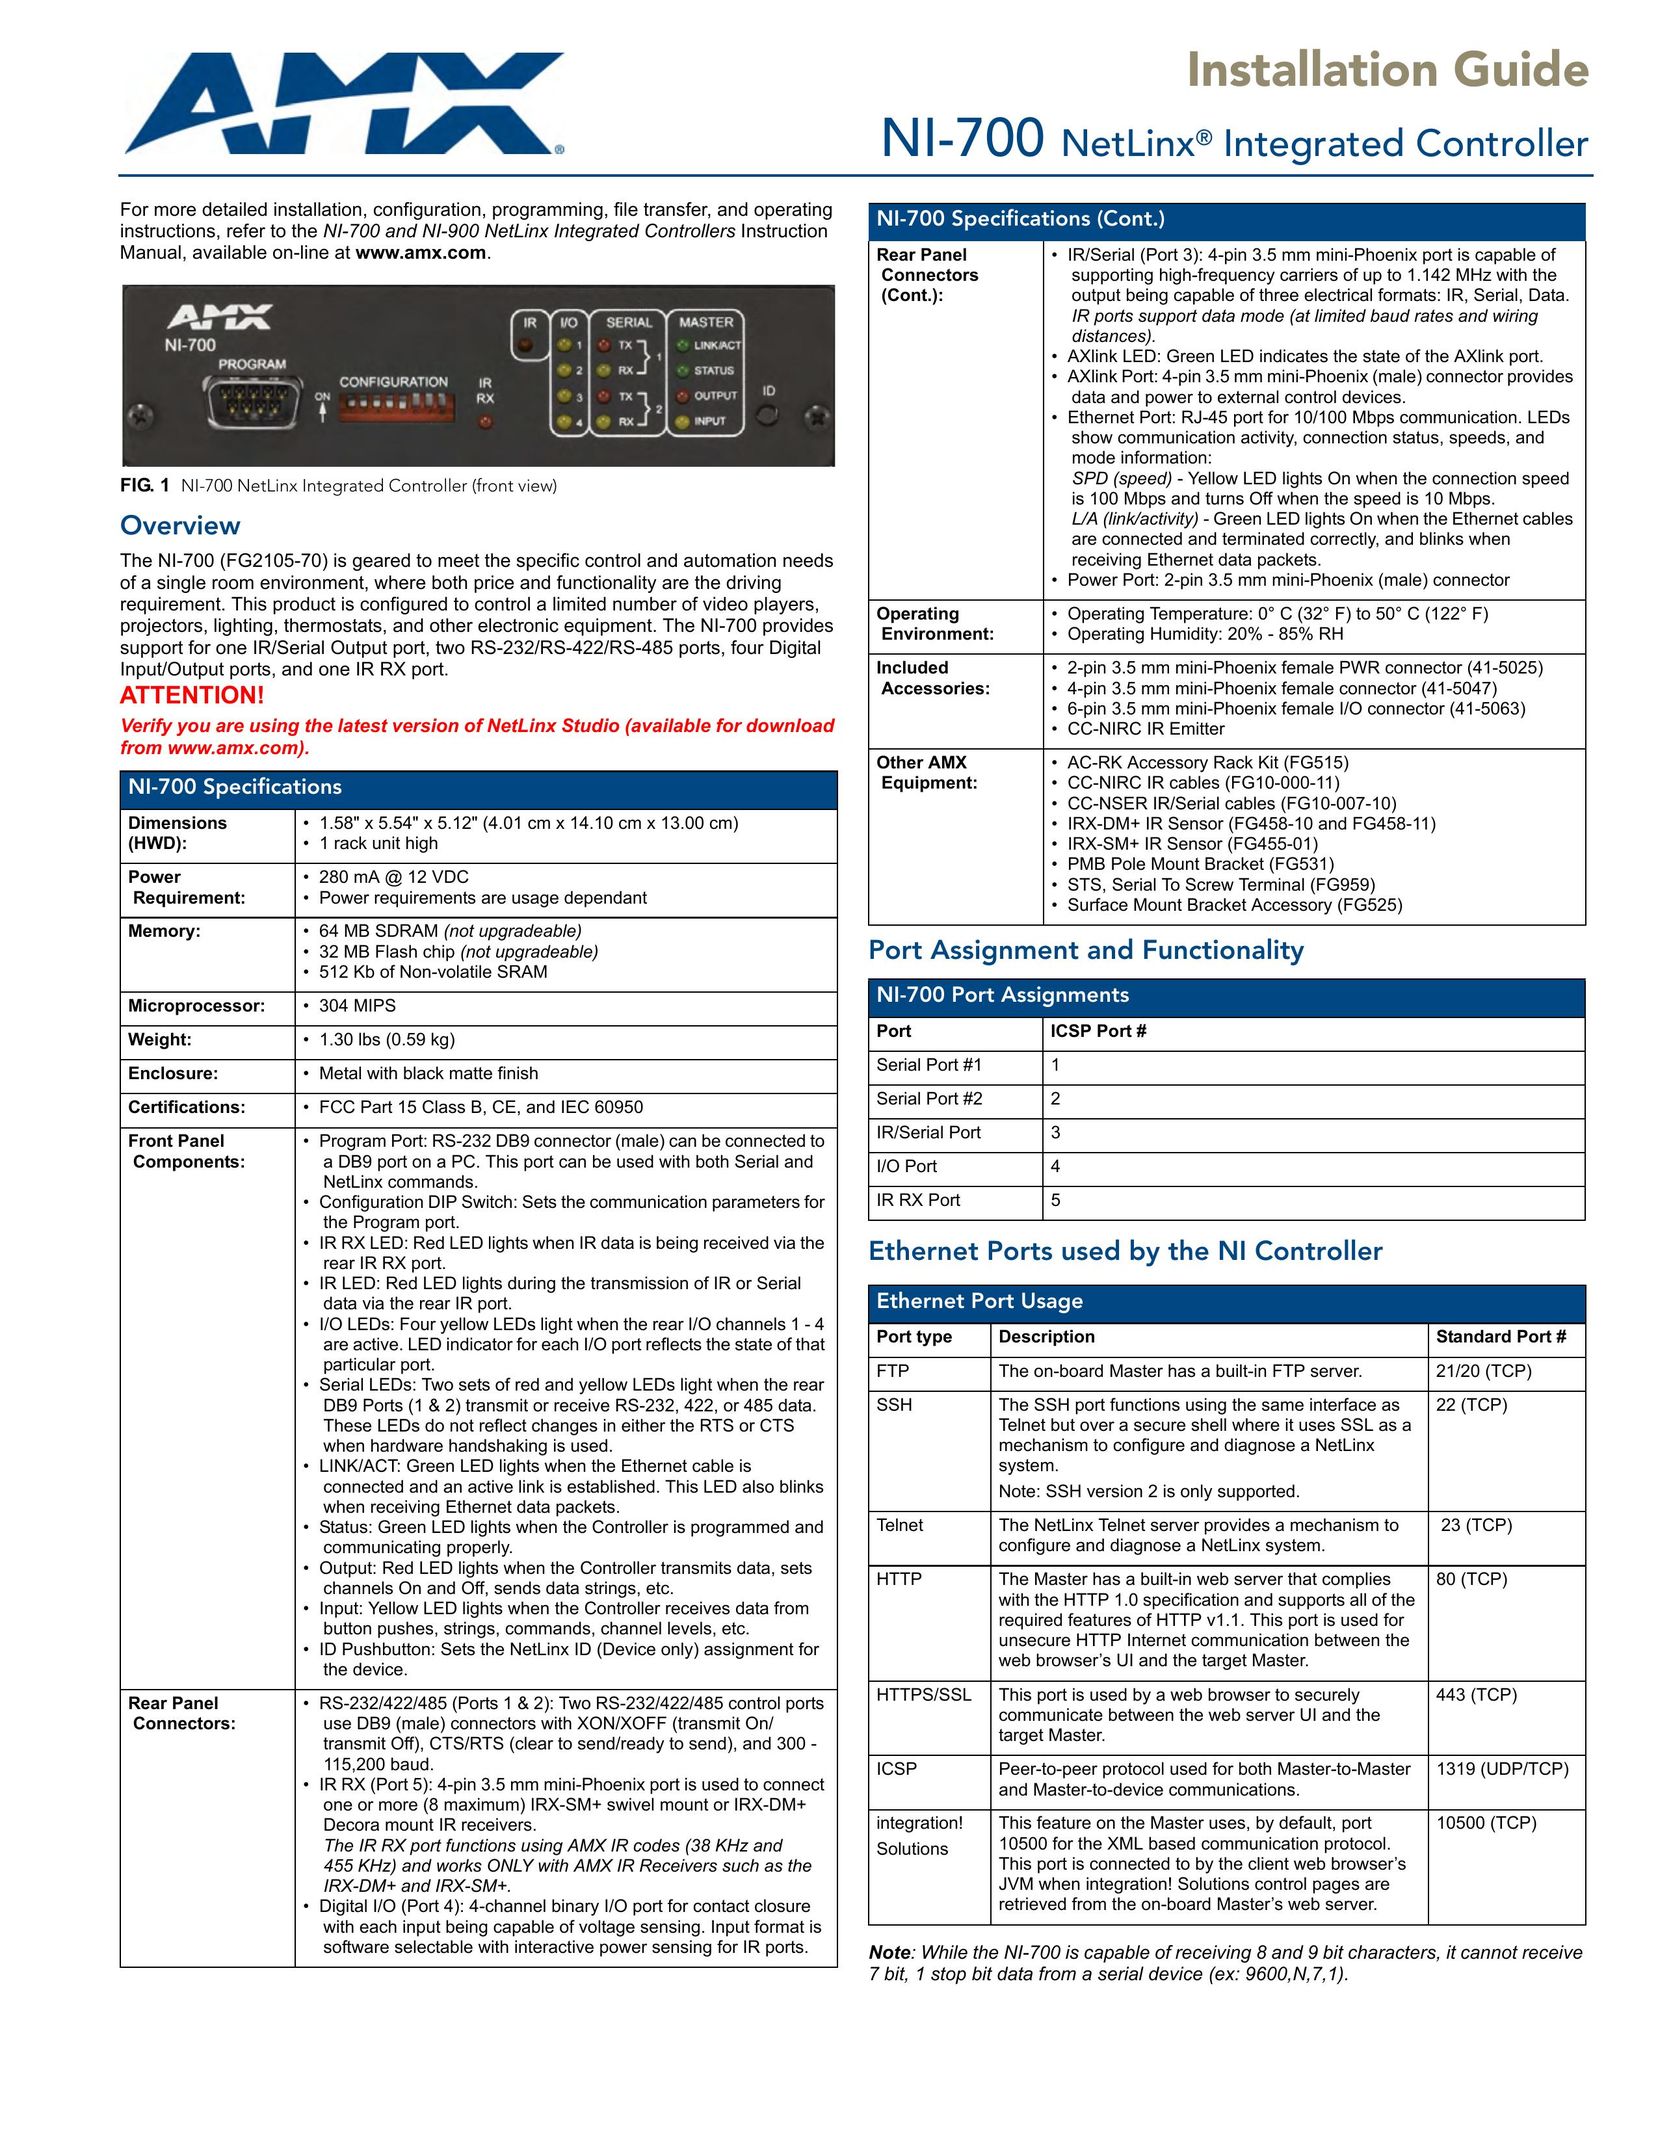 AMX NI-700 Network Card User Manual